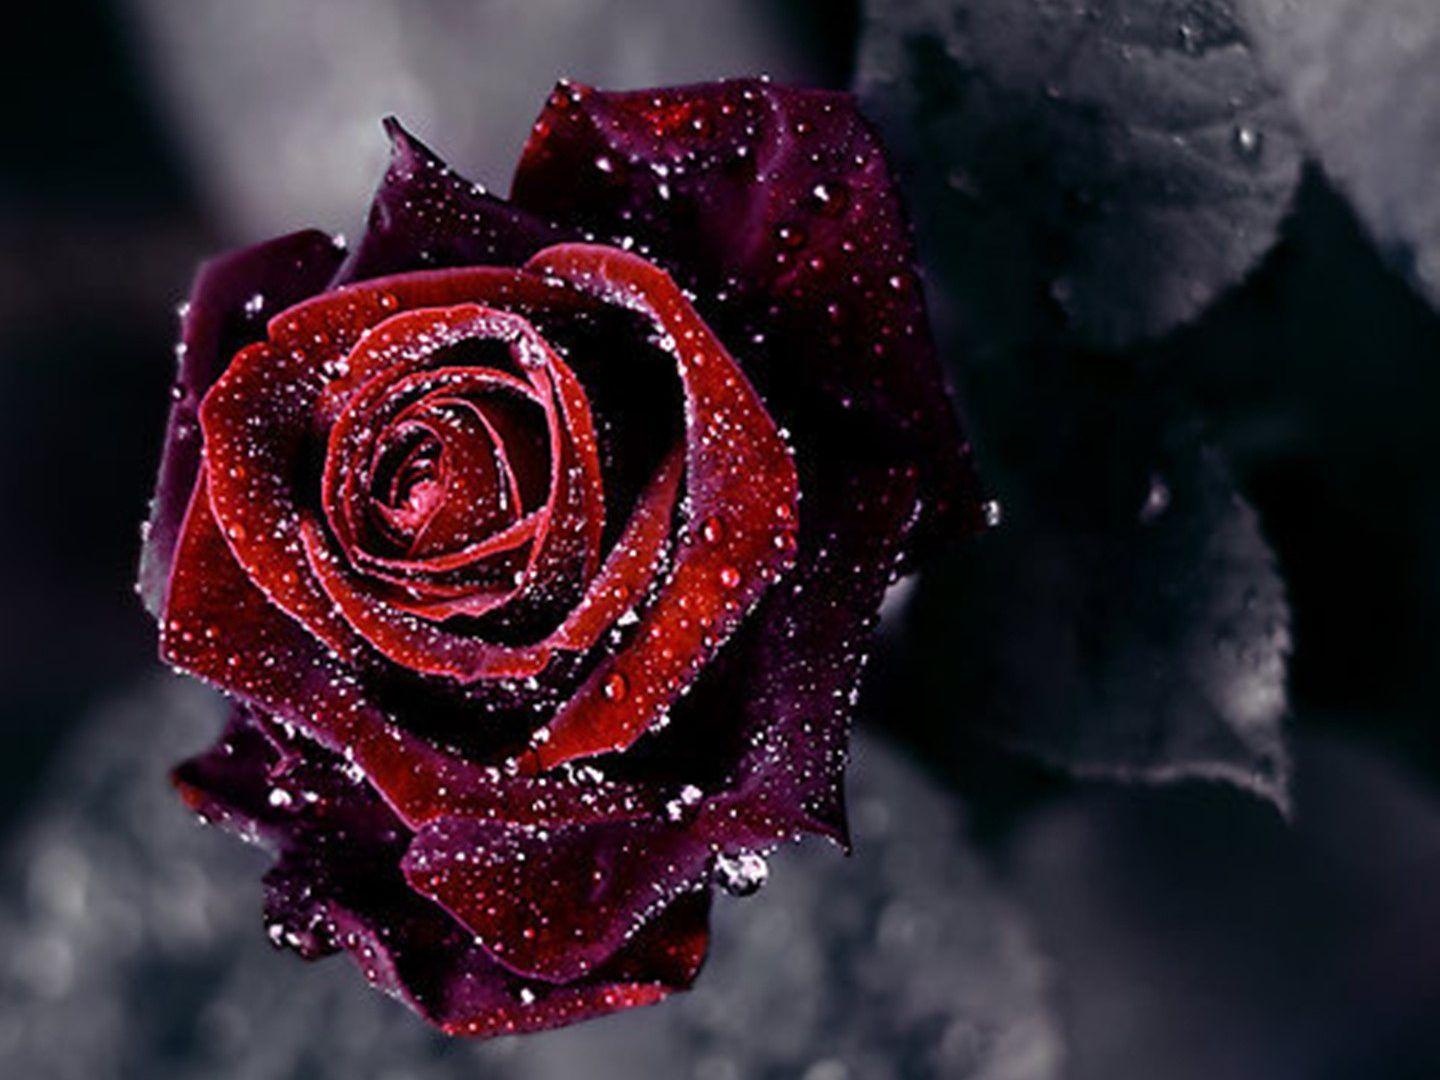 Droplets Tag wallpaper: Nature Raindrops Droplets Dew Flower Rose